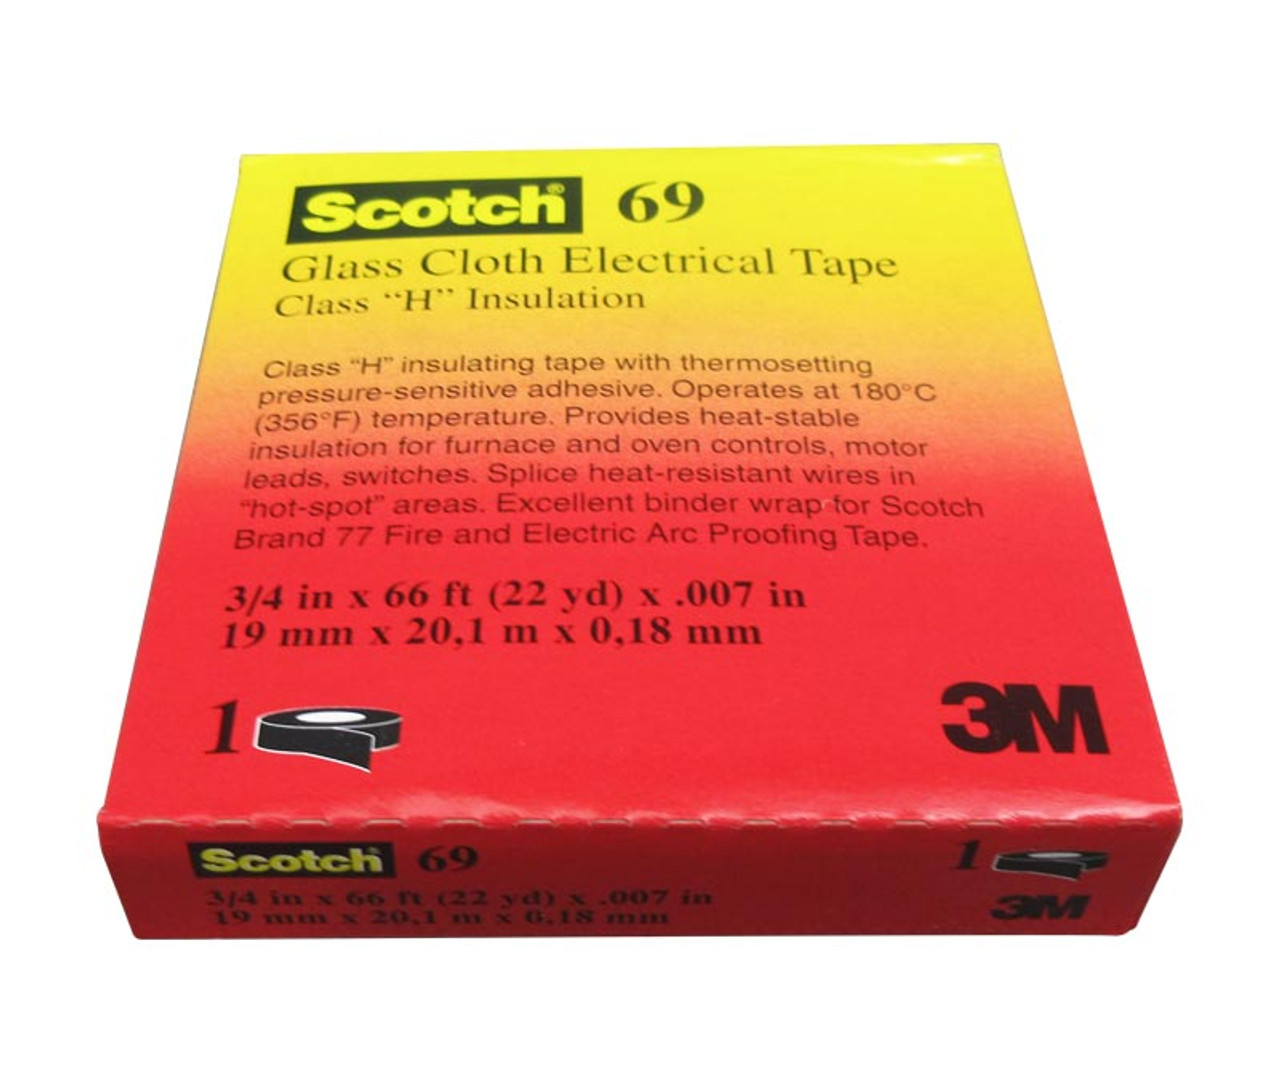 3M Scotch 69 Glass Cloth Electrical Tape, 3/4 x 66ft